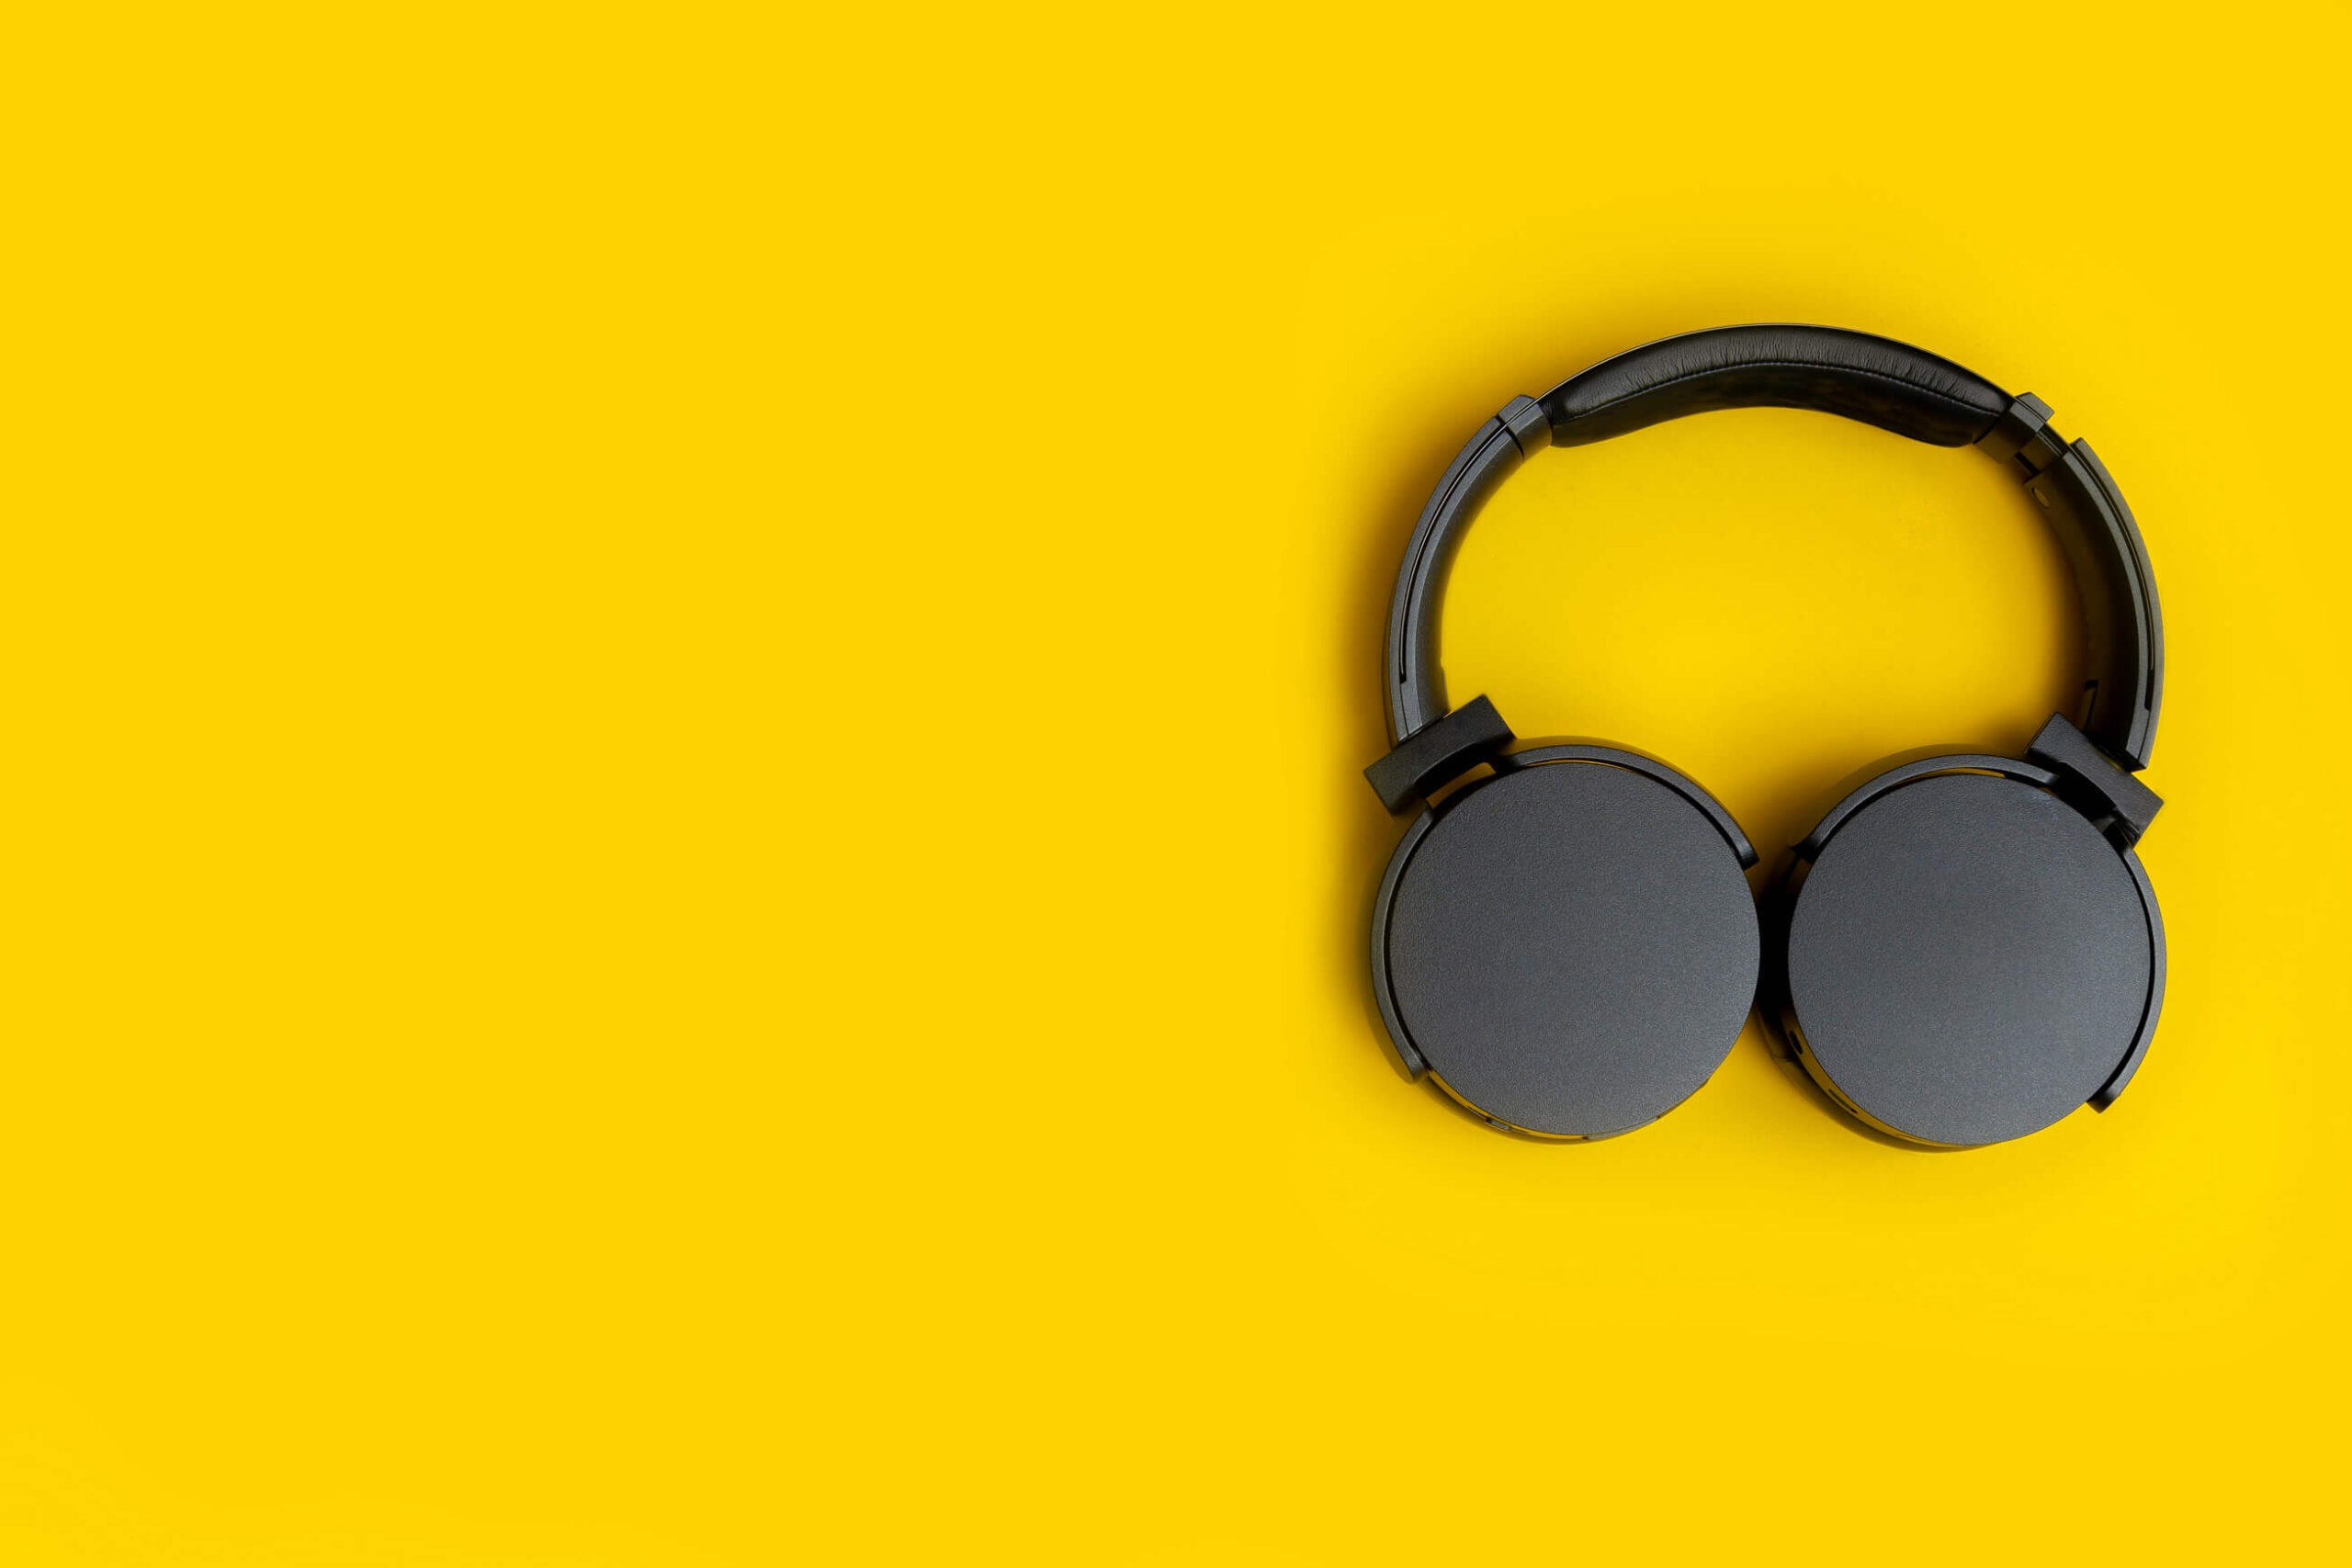 headphones-on-yellow-background-2022-06-17-23-29-03-utc.jpg